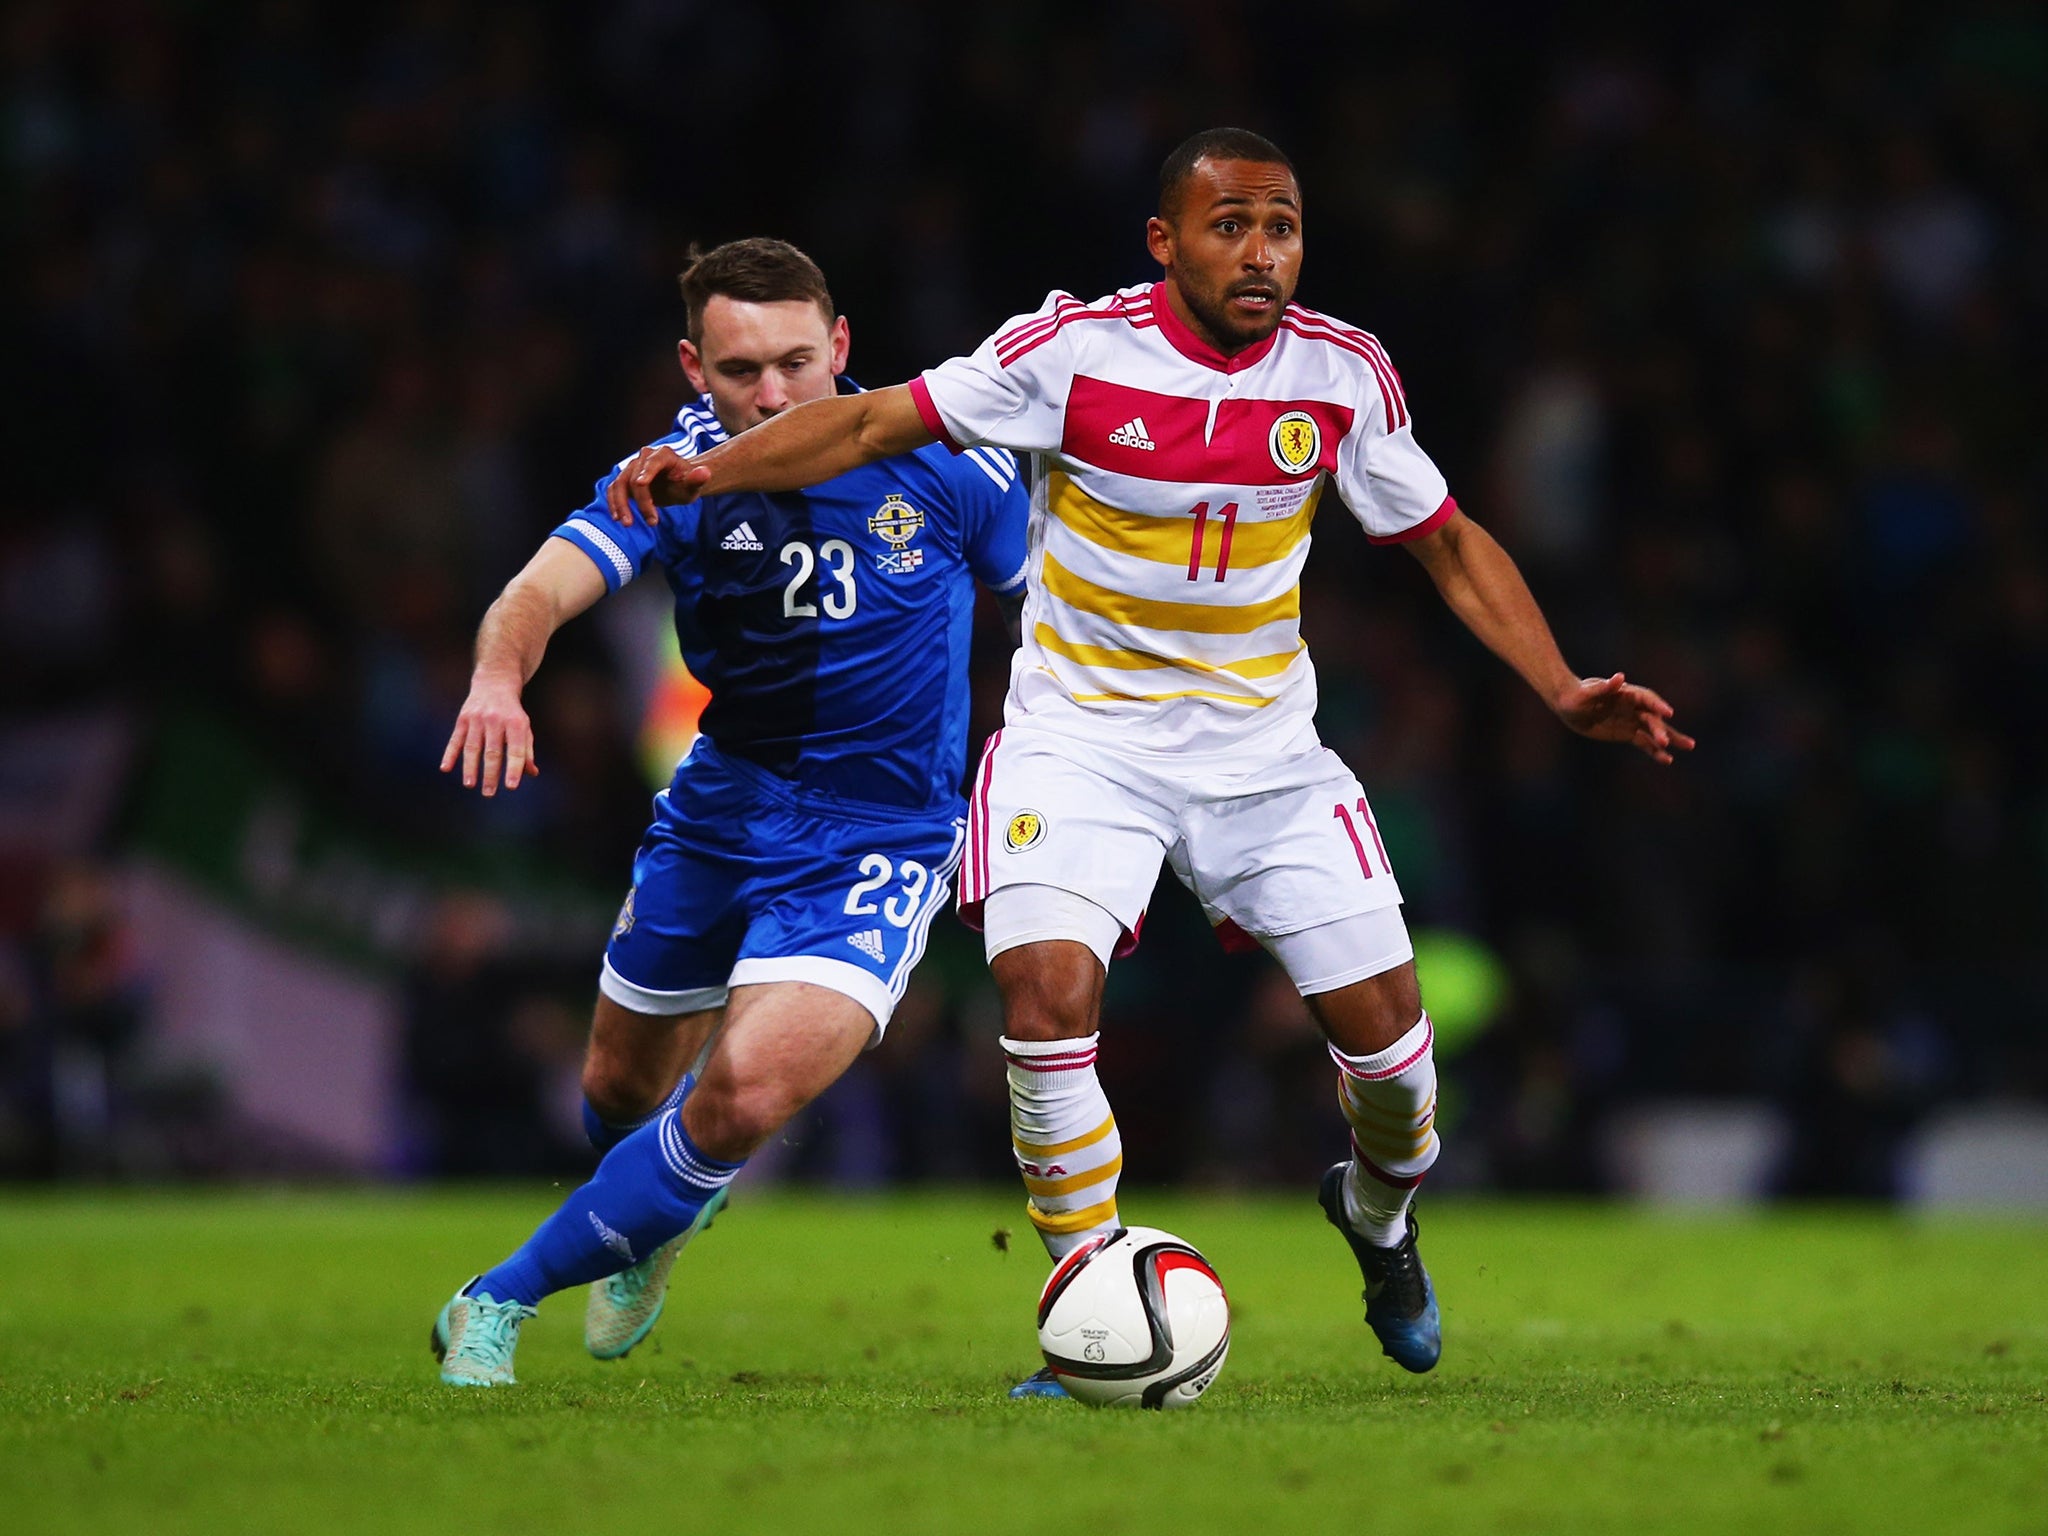 Ikechi Anya impressed during Scotland’s 1-0 win over
Northern Ireland on Wednesday